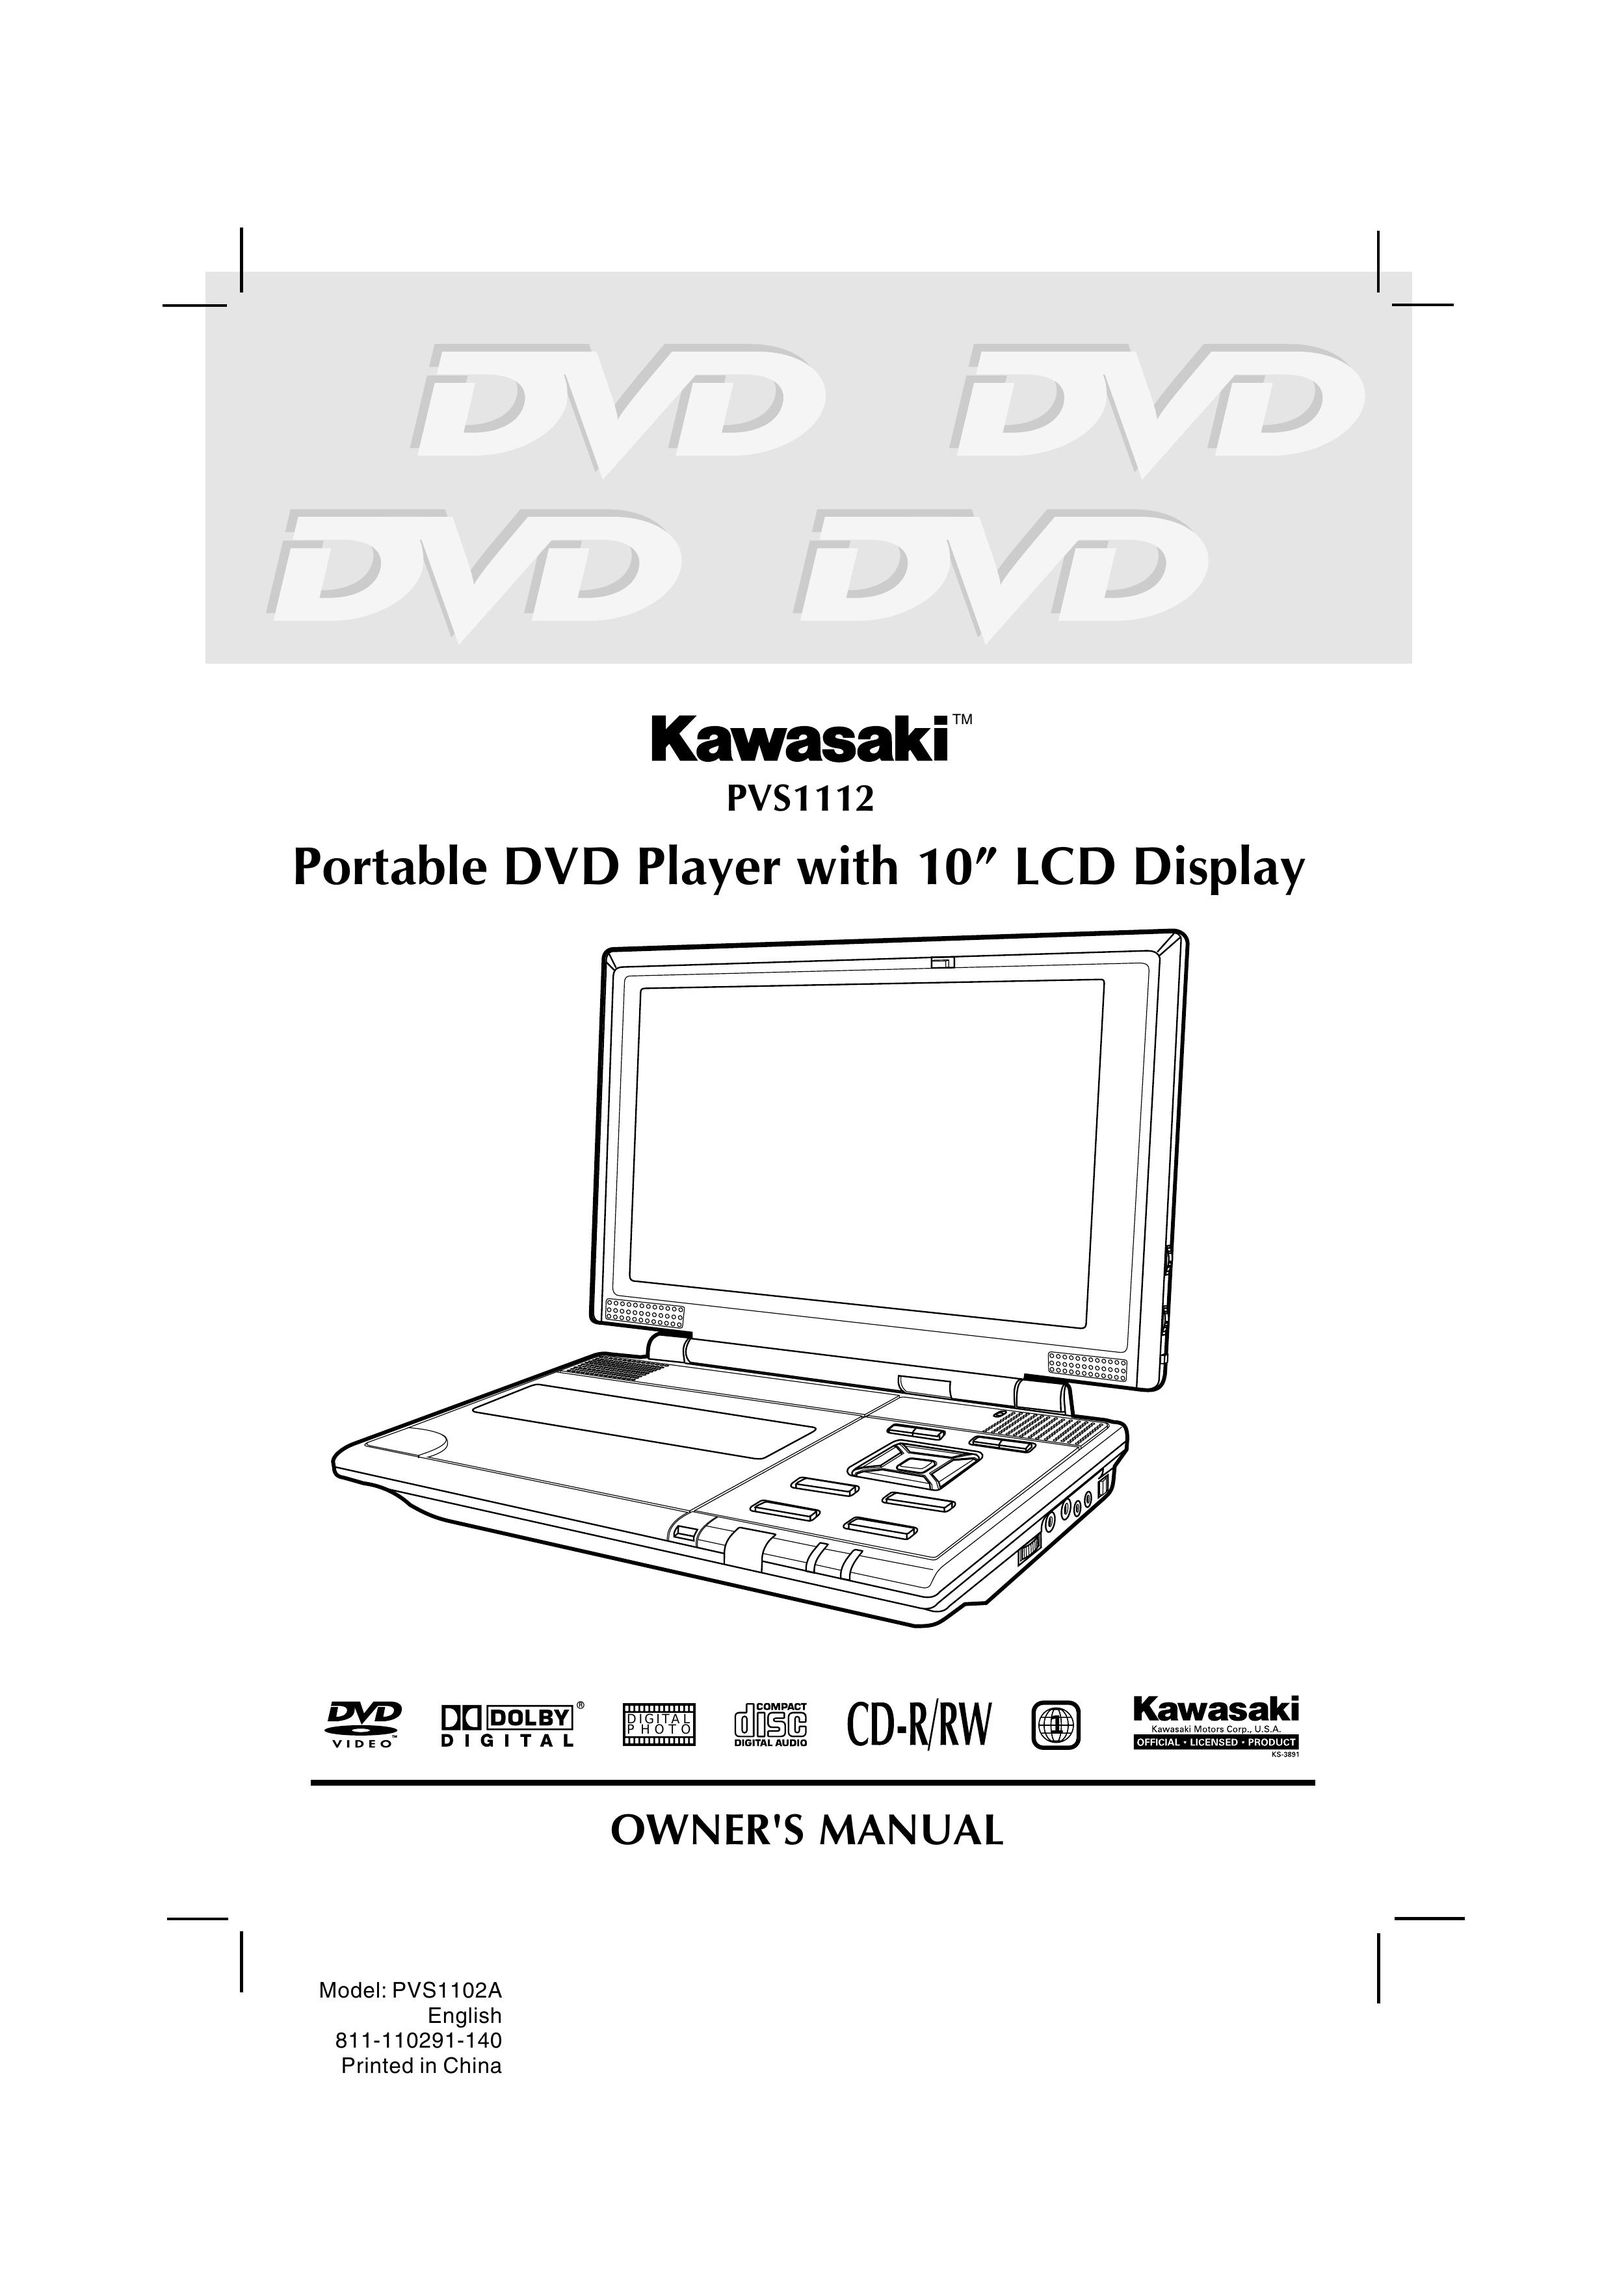 Kawasaki PVS1112 Portable DVD Player User Manual